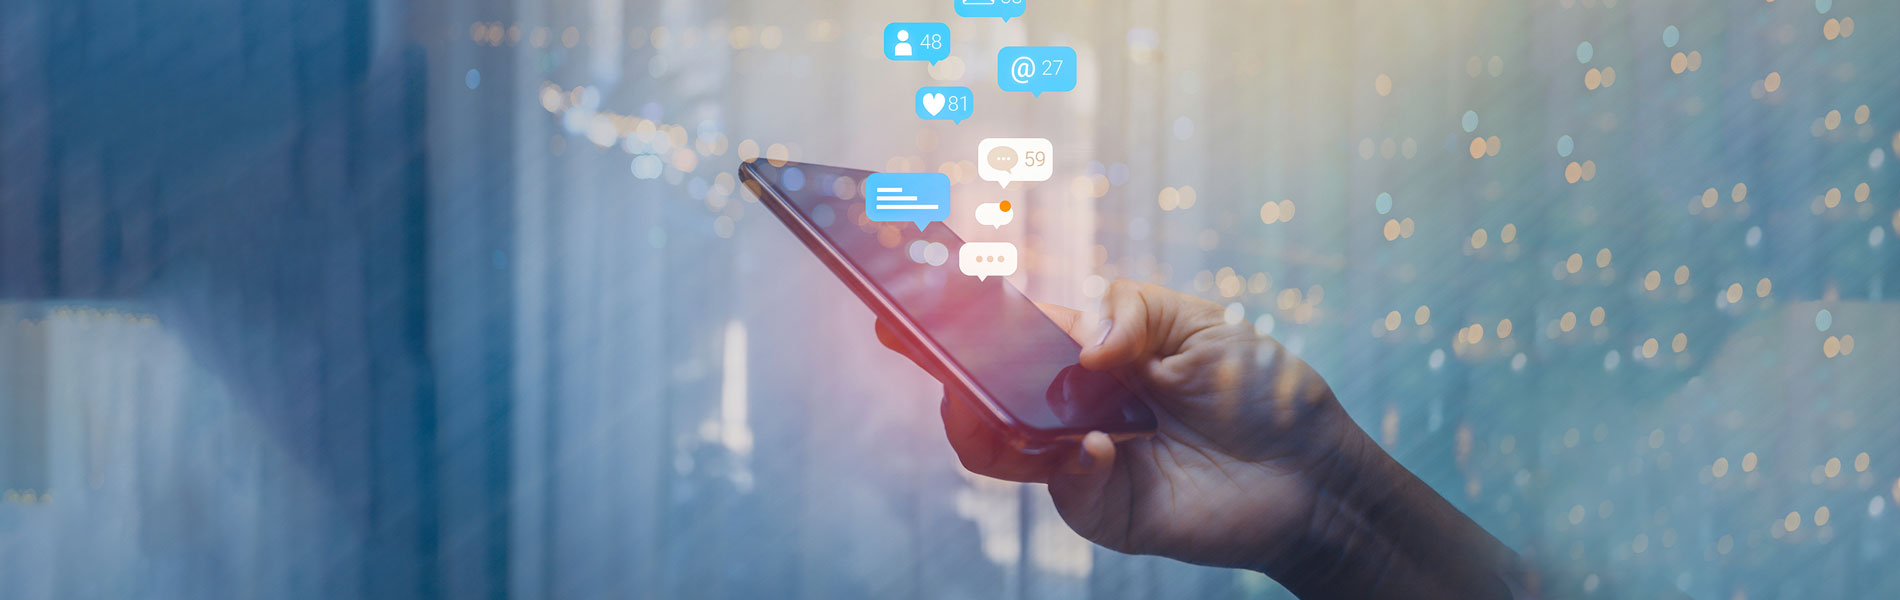 Social media on smart phone notifications